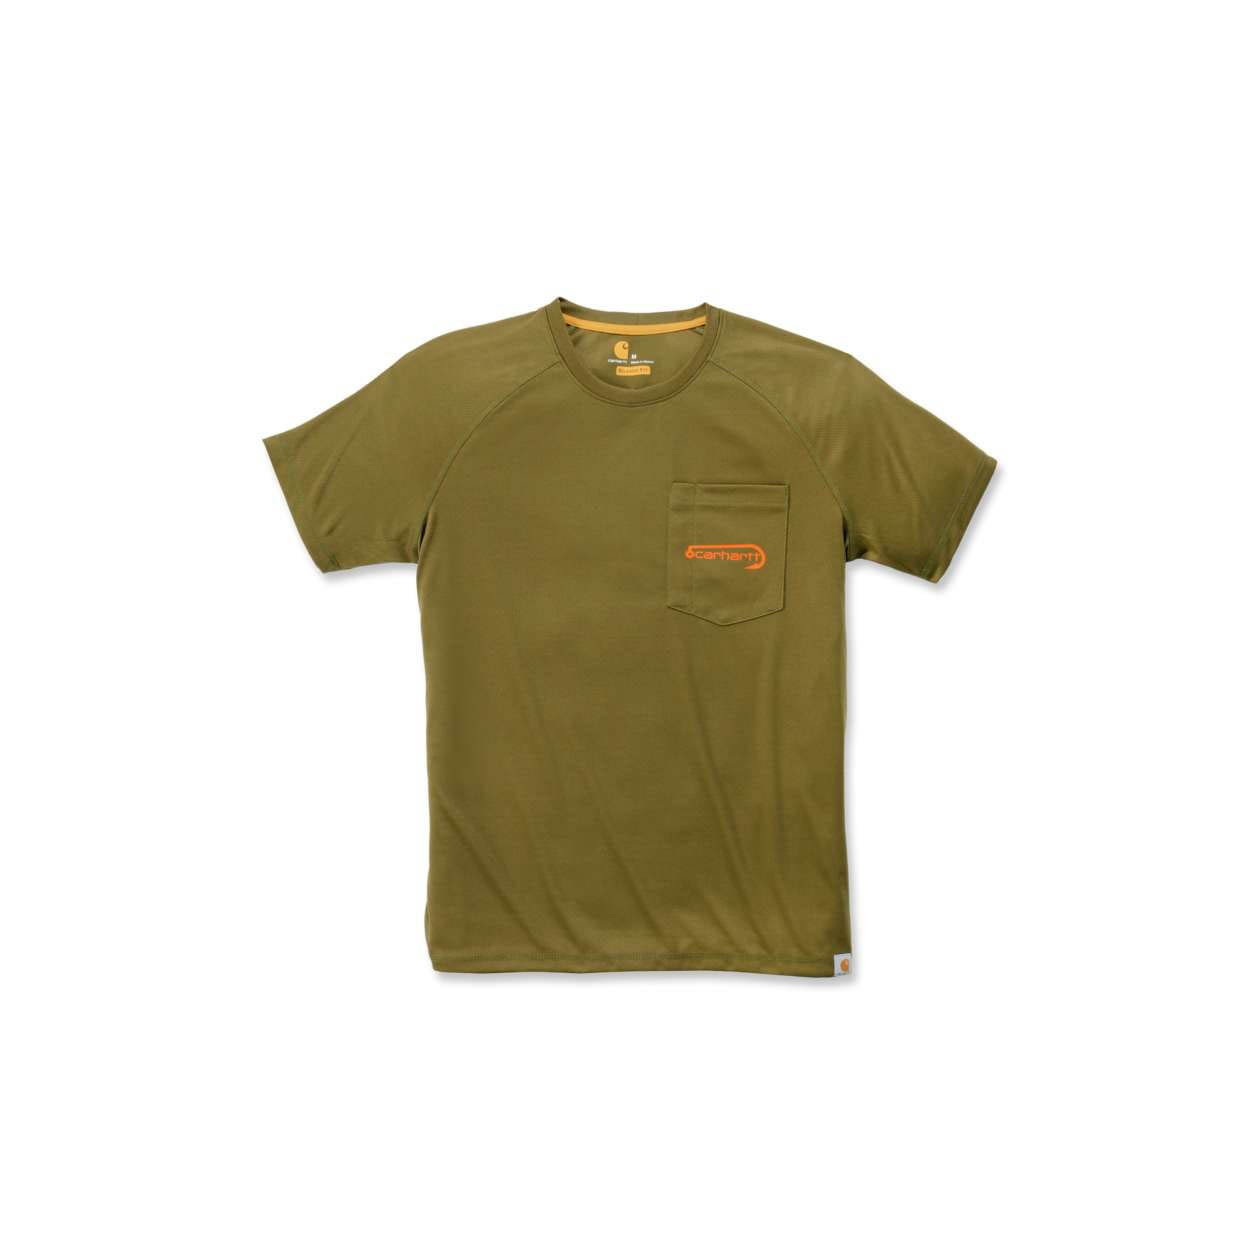 Carhartt 103570 Fishing T-Shirt S/S Military Olive - Lightweight T Shirts -  Unisex / Men's T Shirts - T Shirts - Leisurewear - Best Workwear